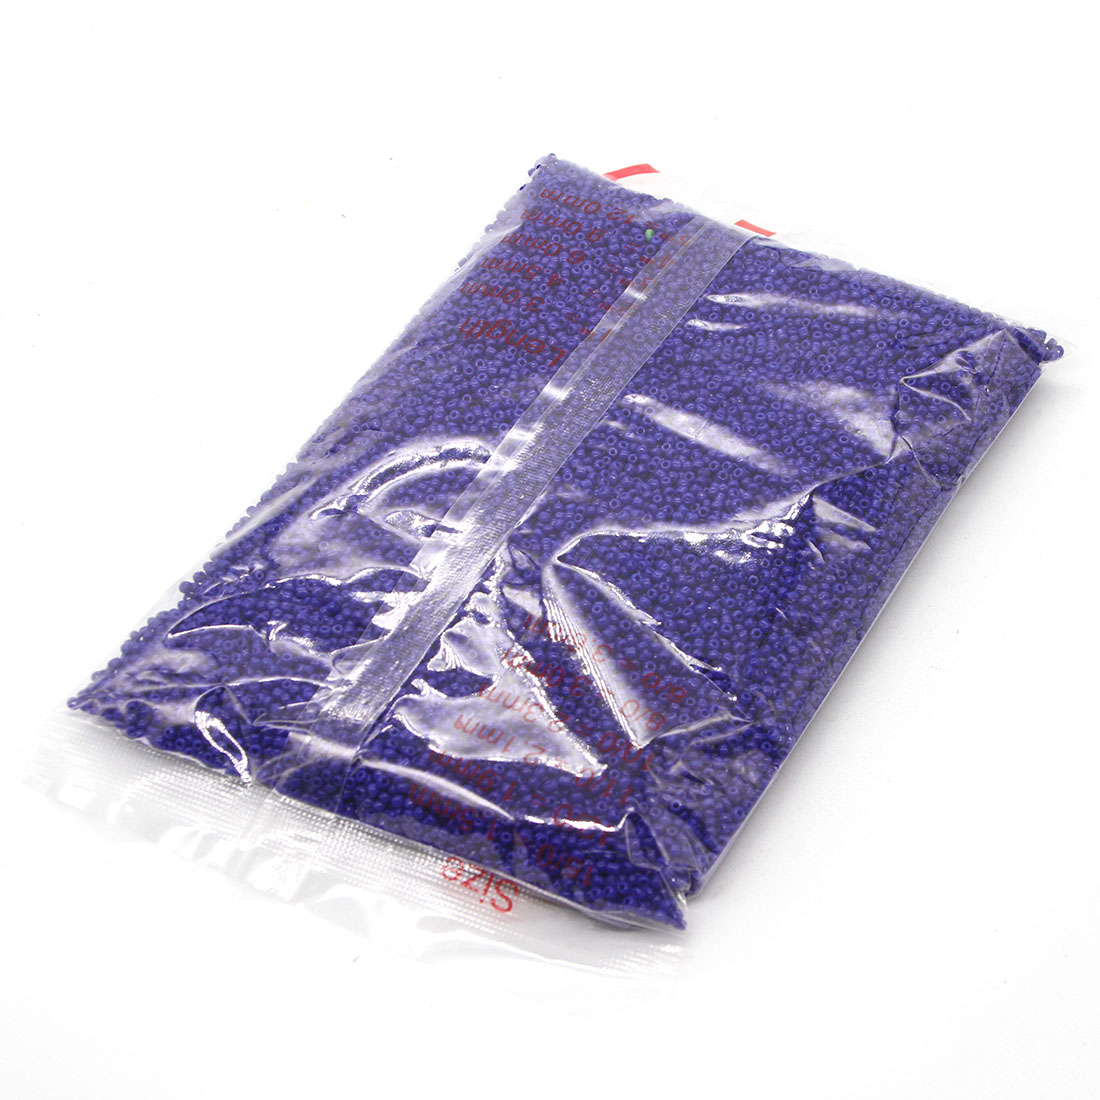 Dark purple 2mm pack of 30,000